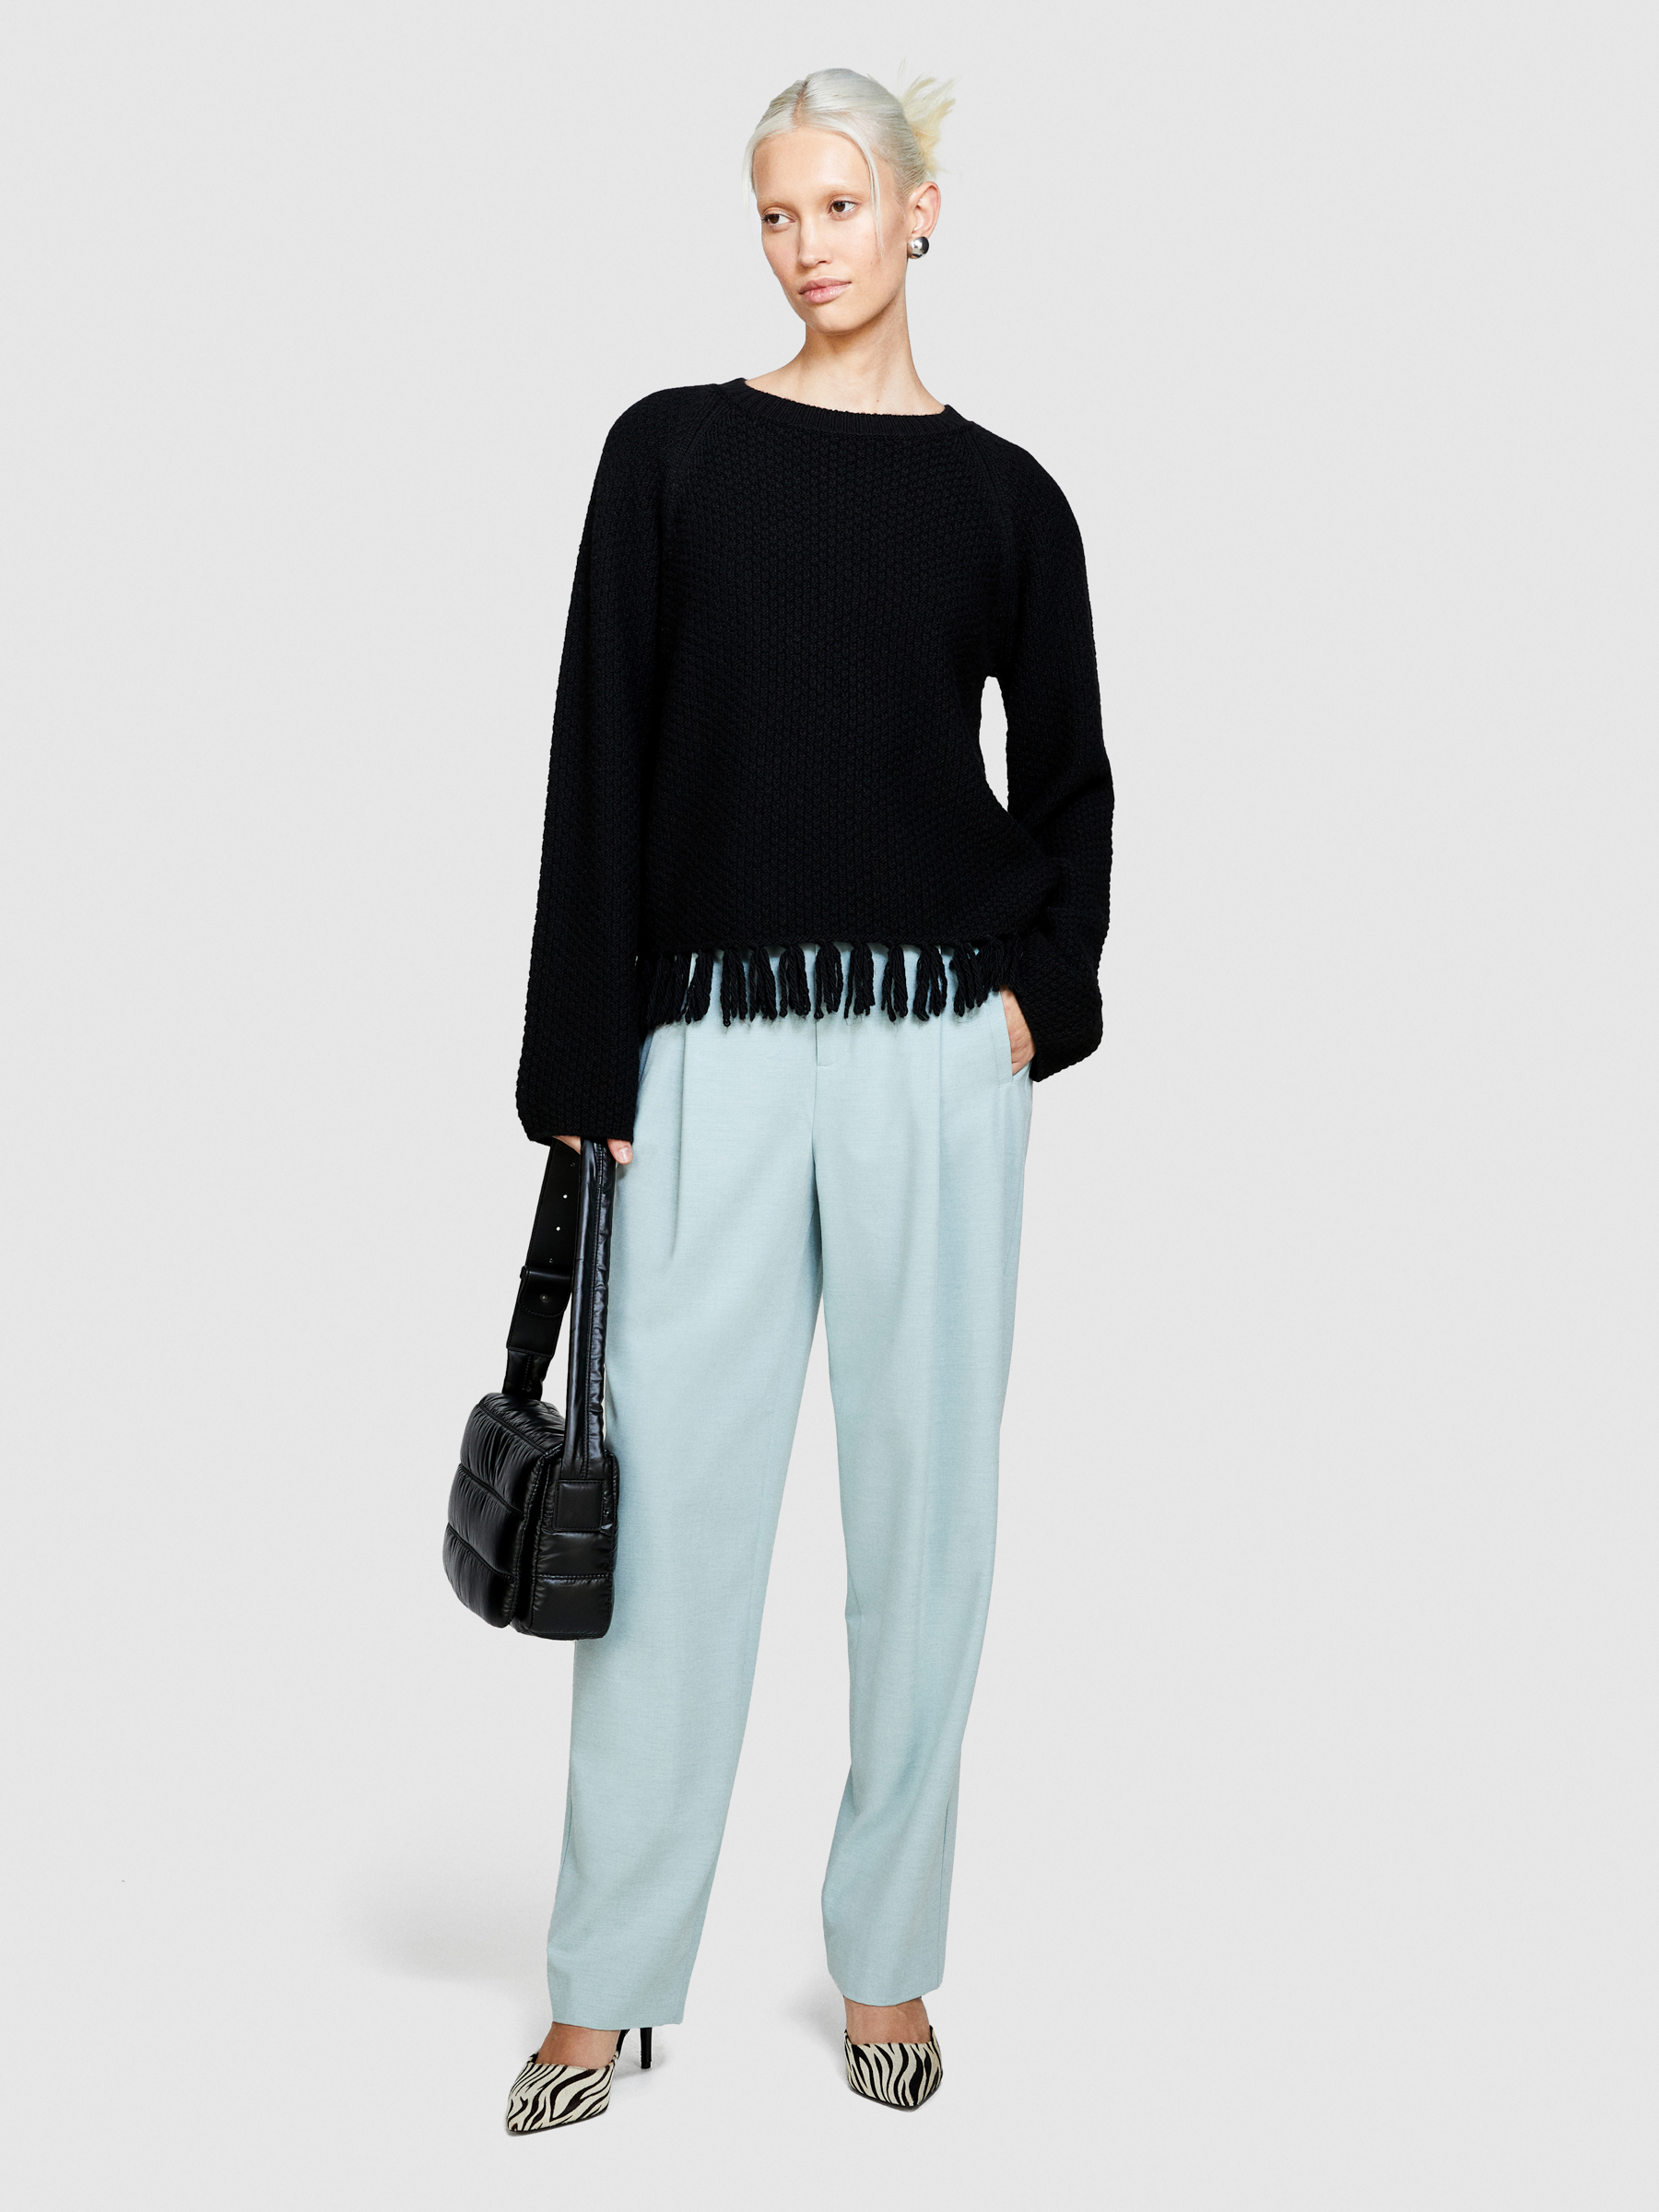 Sisley - Sweater With Fringe, Woman, Black, Size: XS